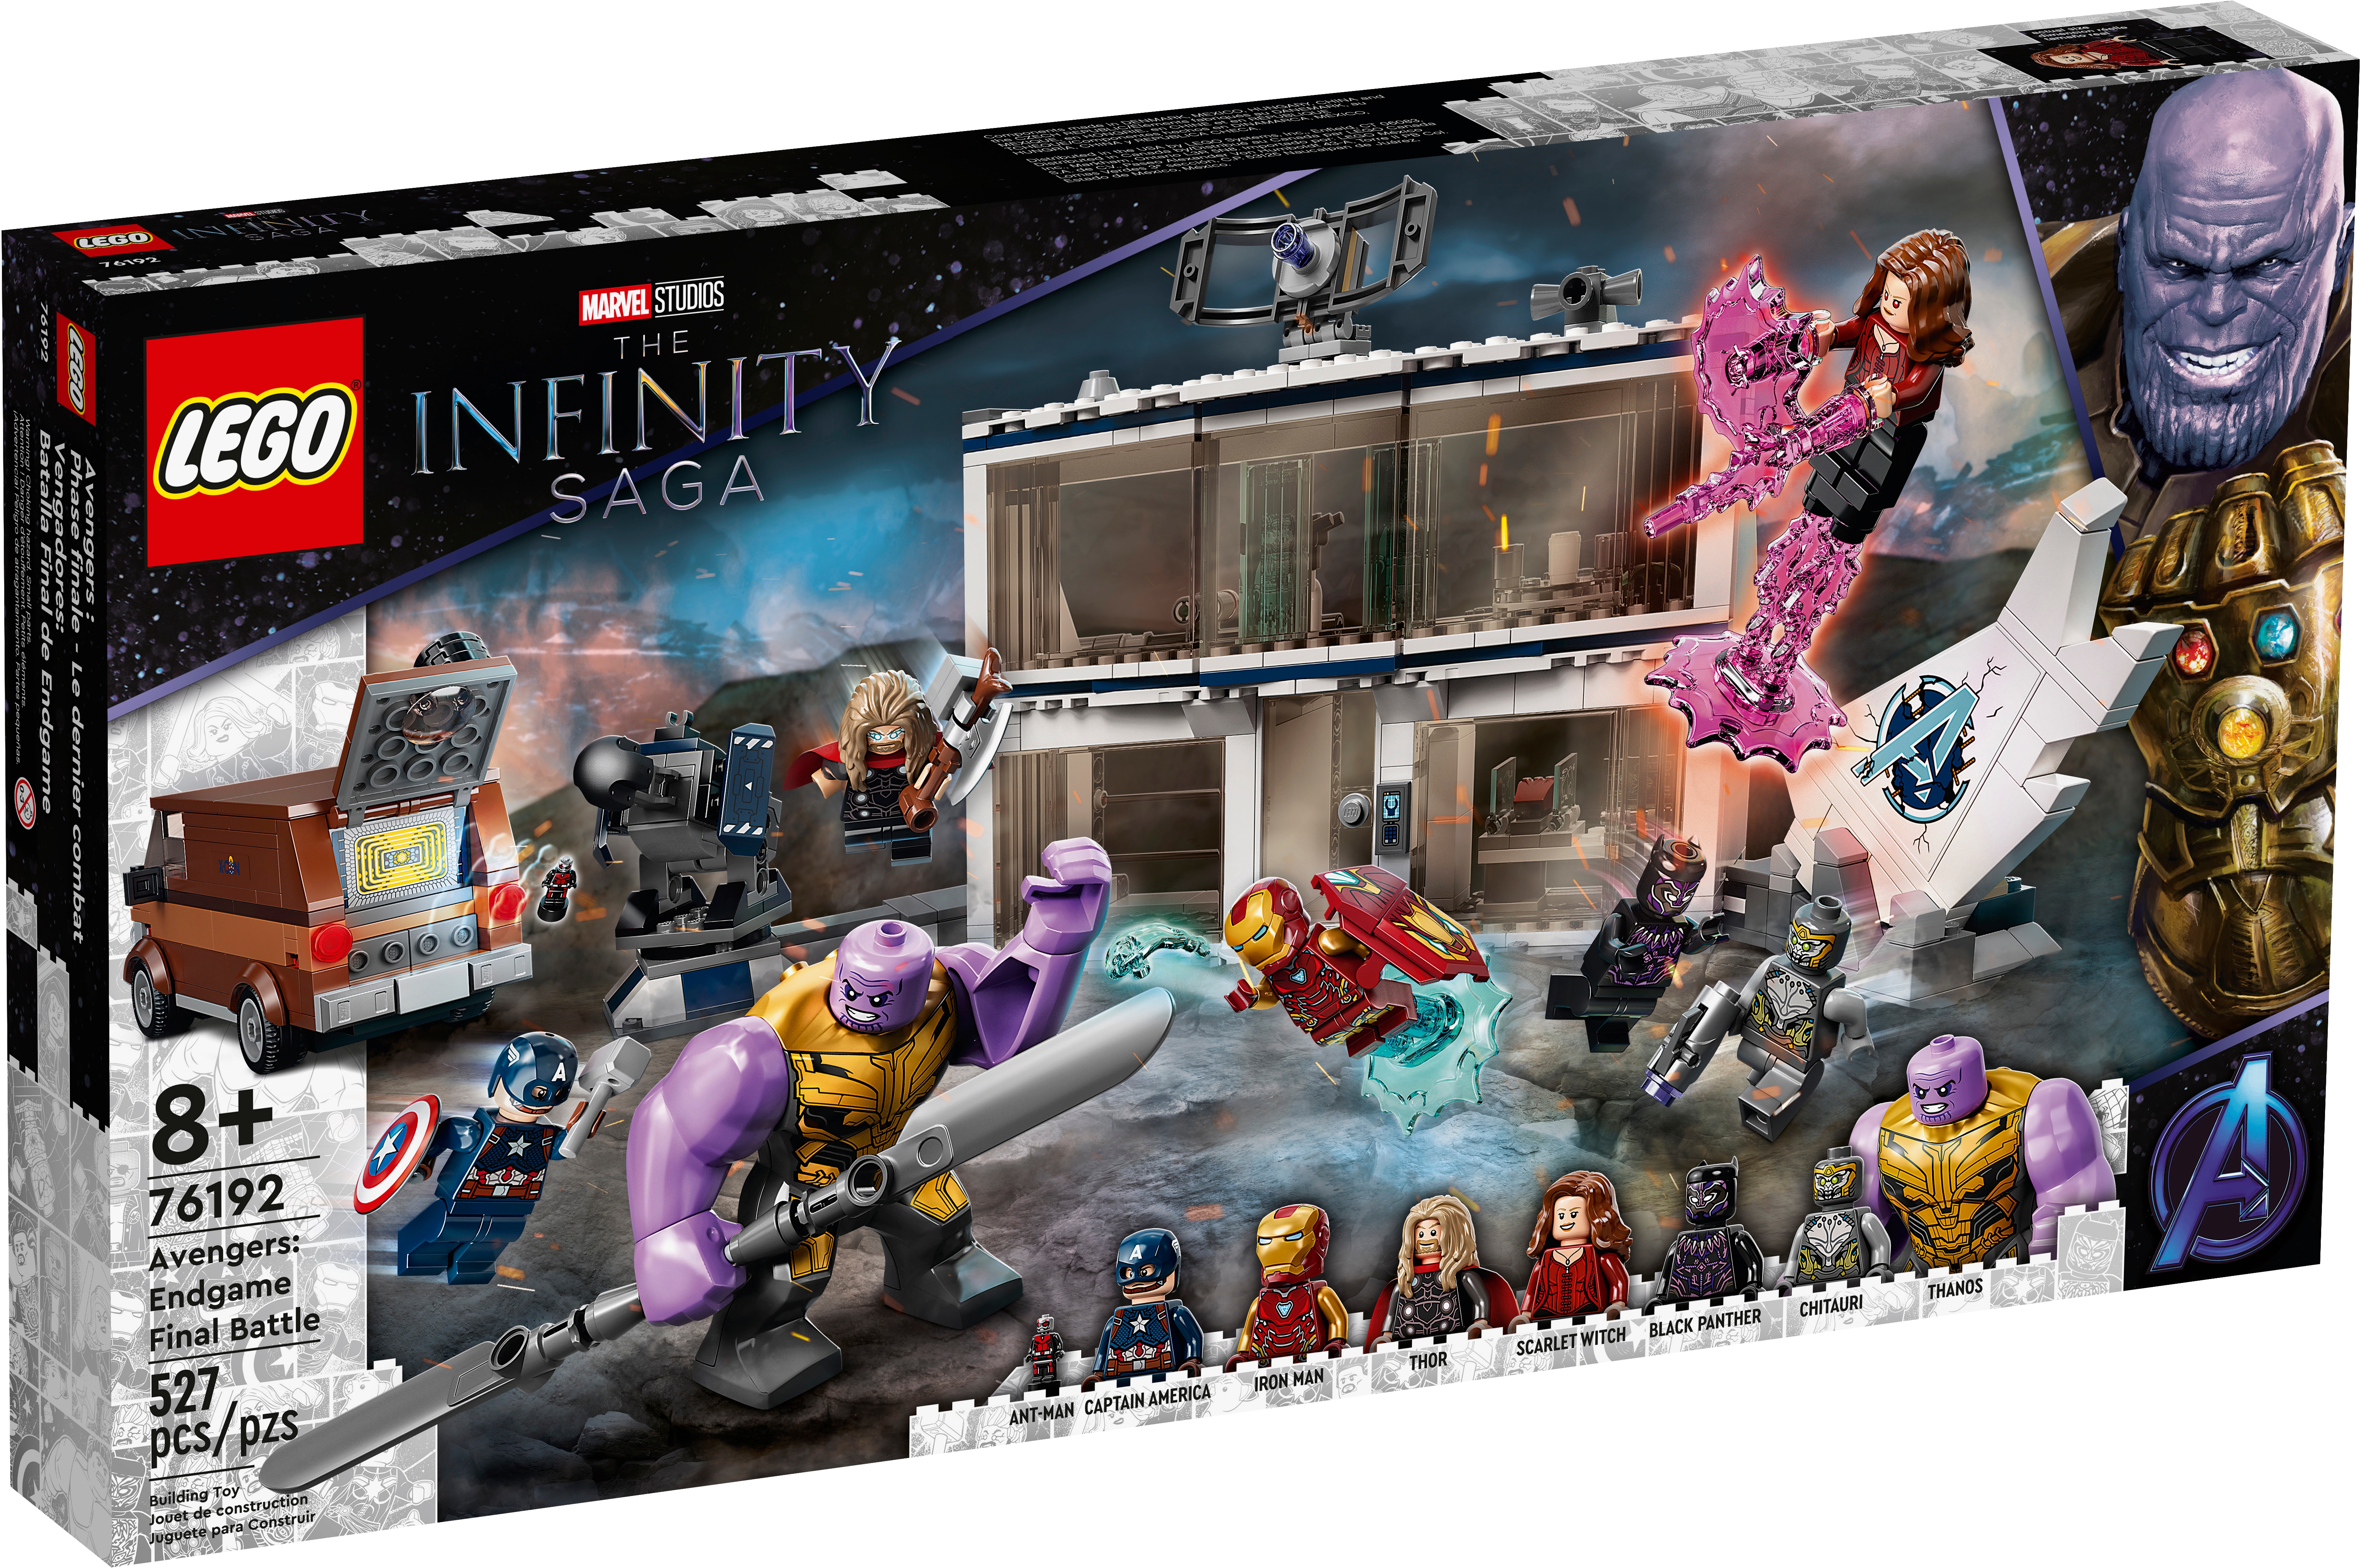 Thanos 2020 Avengers End Game Lego Moc Minifigure kids Gift Building blocks Toys 